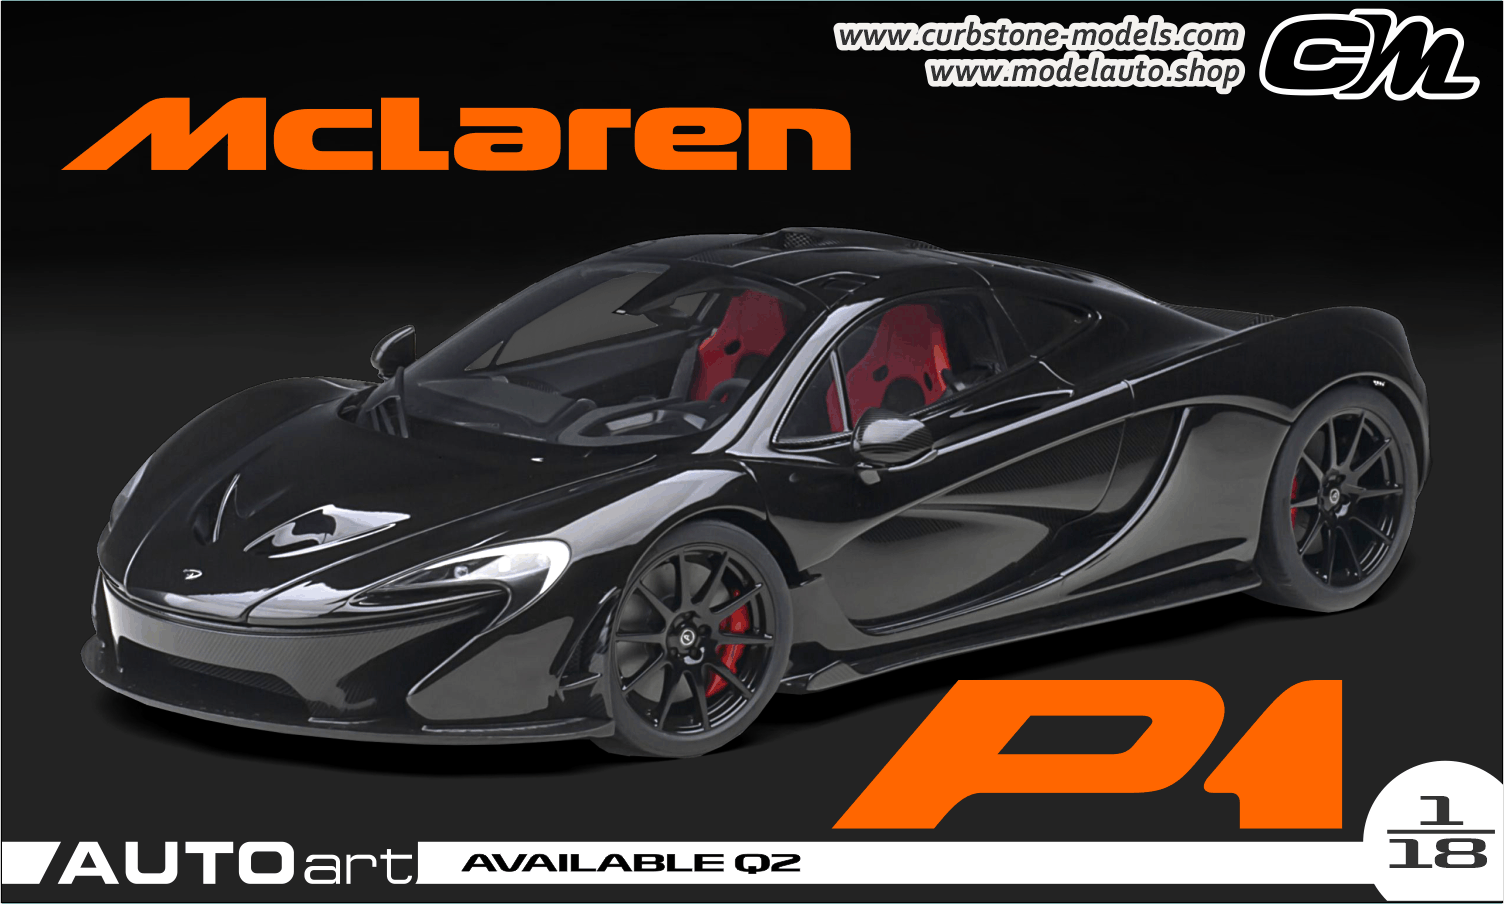 Image of the Autoart 76065 1:18 McLaren P1 Fire Black